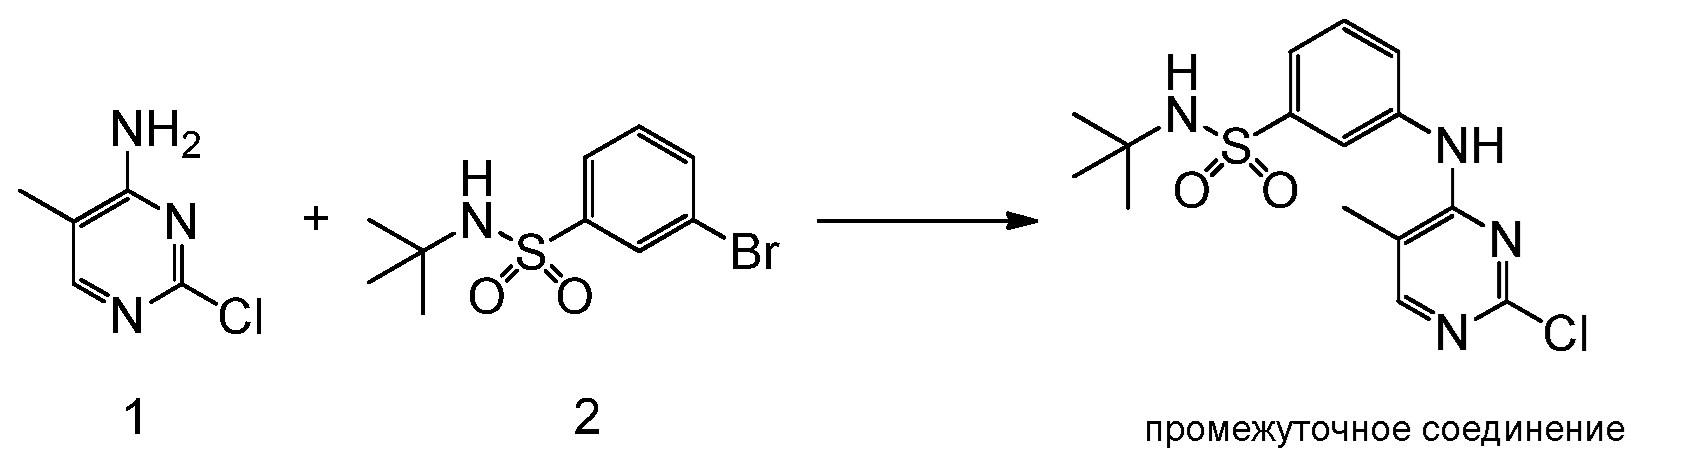 Алюминий бром 3 хлор 2. Пиримидин и пирролидин. Трет-бутилгидрохинон. Трет бутилгидропероксид разложение. Трет бутилкарбинол.